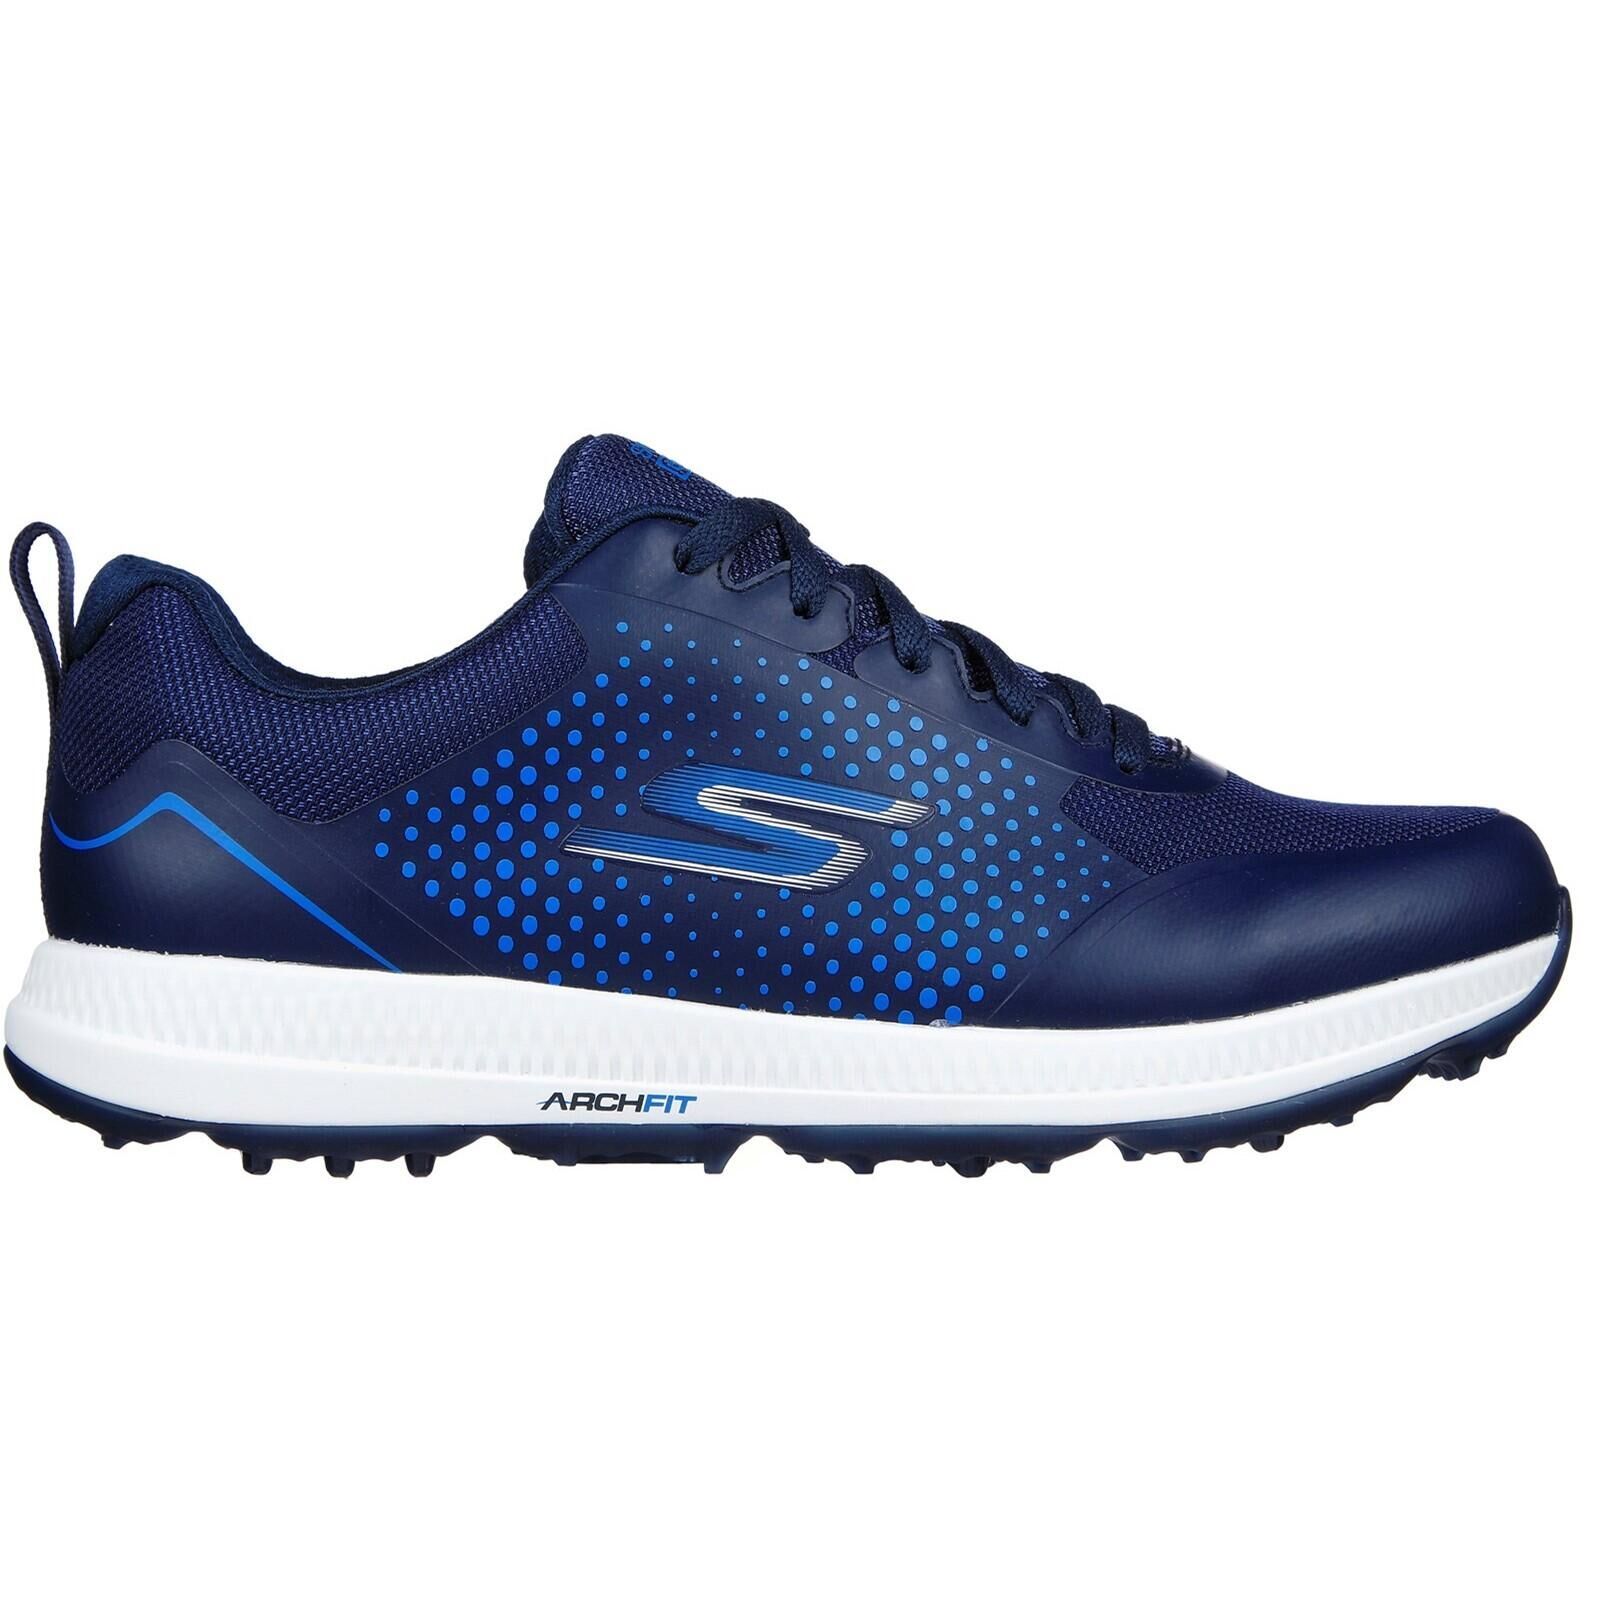 SKECHERS Go Golf Elite 5 Sport Golf Shoes Navy blue